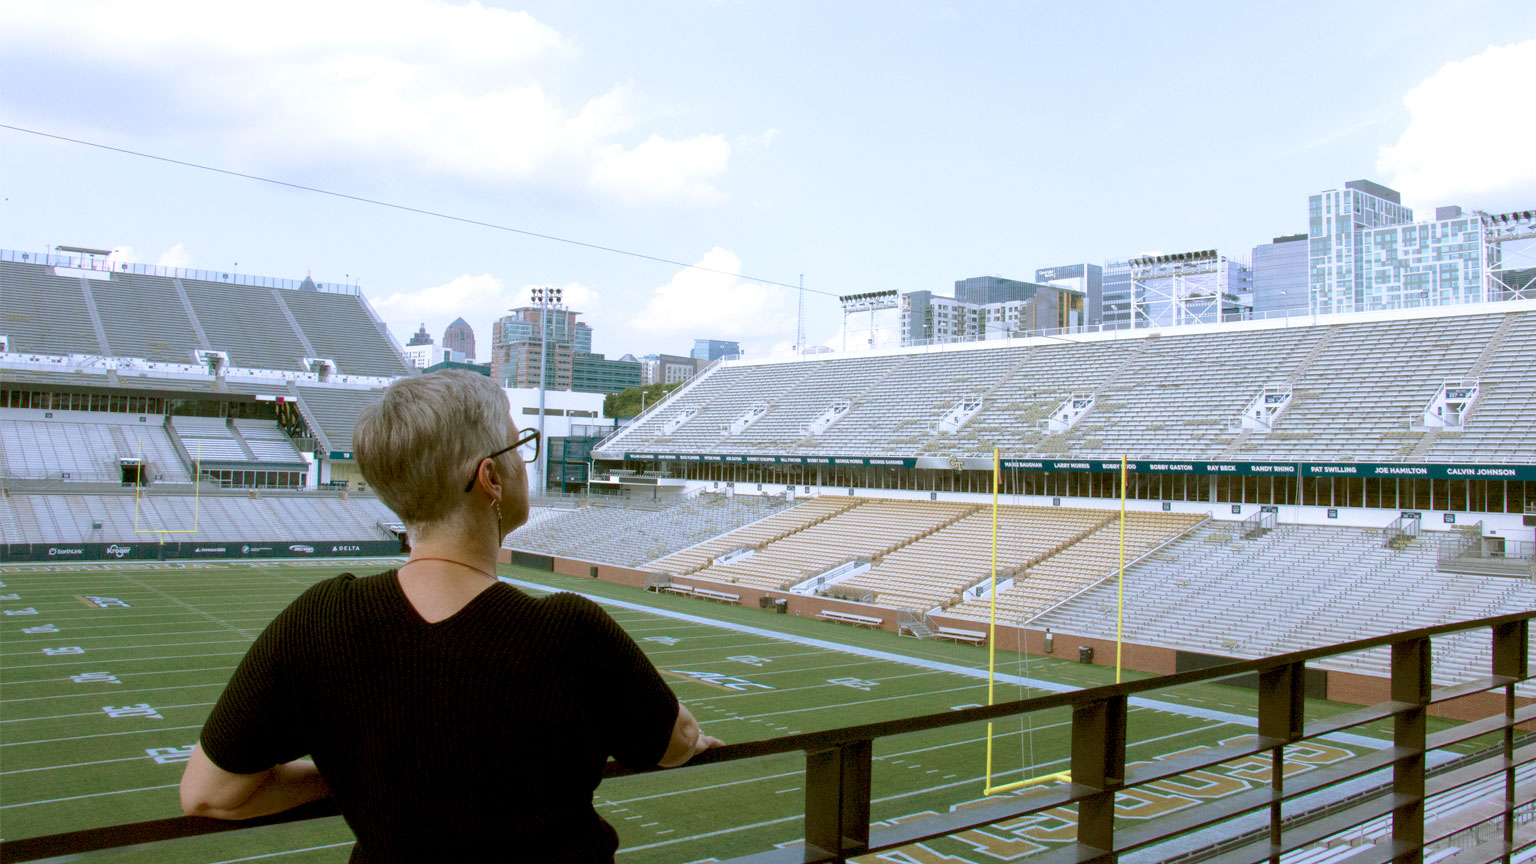 Michelle Rinehart looks out on the Bobby Dodd Stadium field and Atlanta skyline.